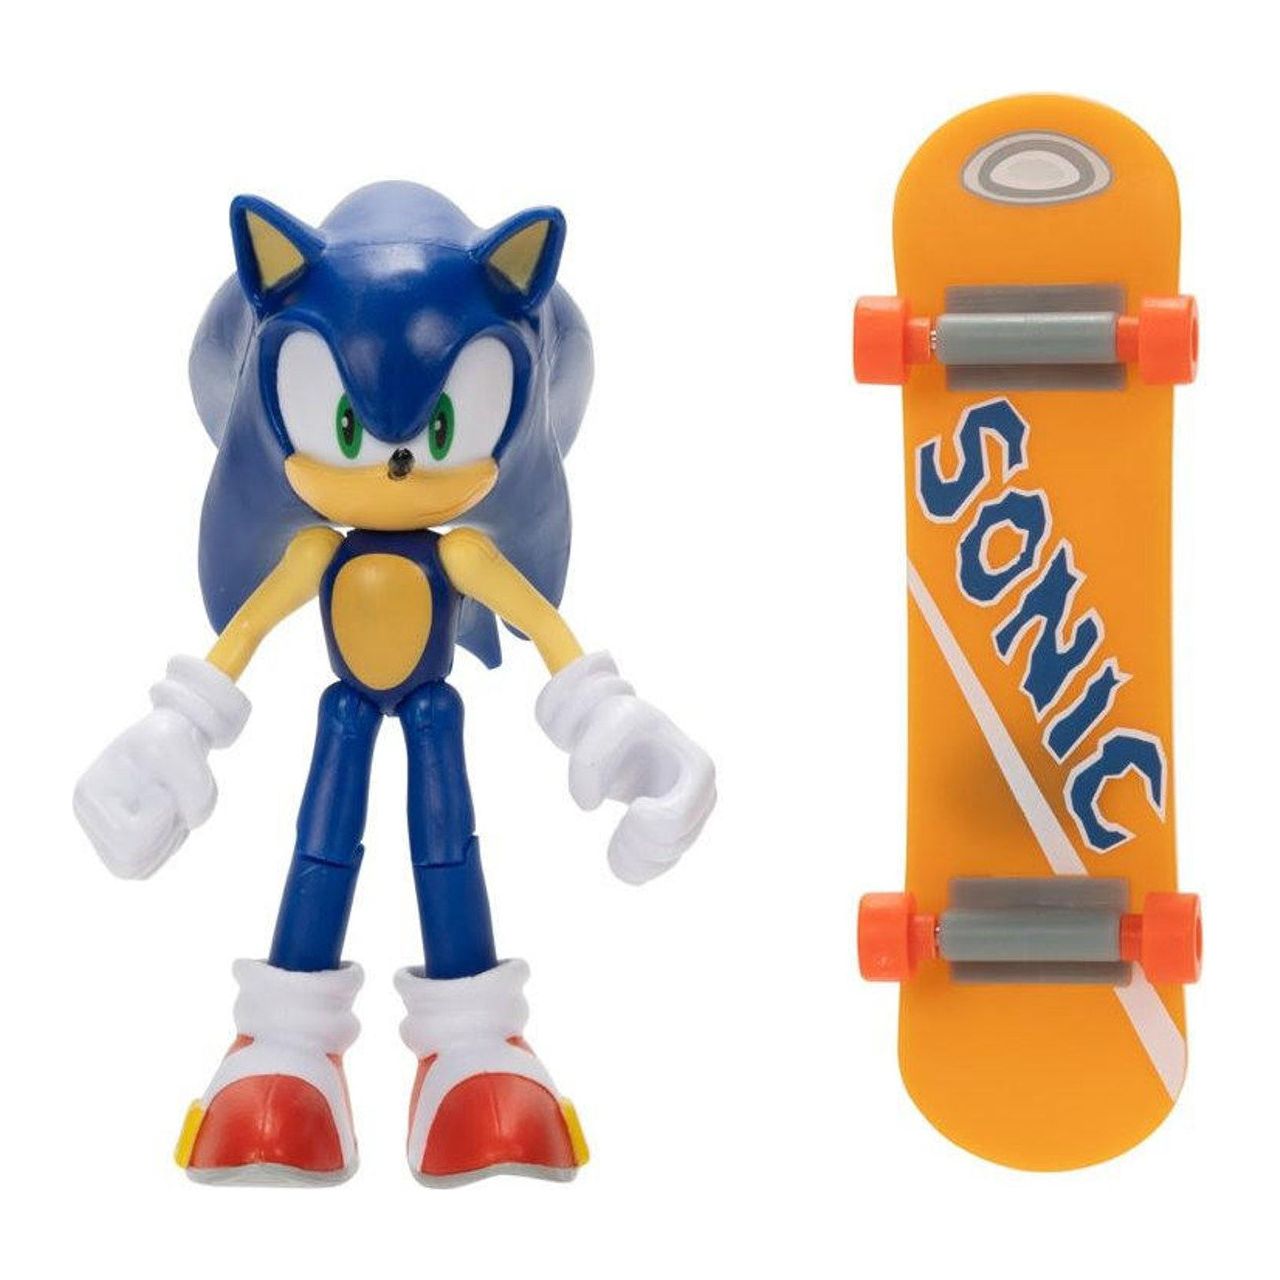 Sonic the Hedgehog Skateboard Action Figure by Jakks